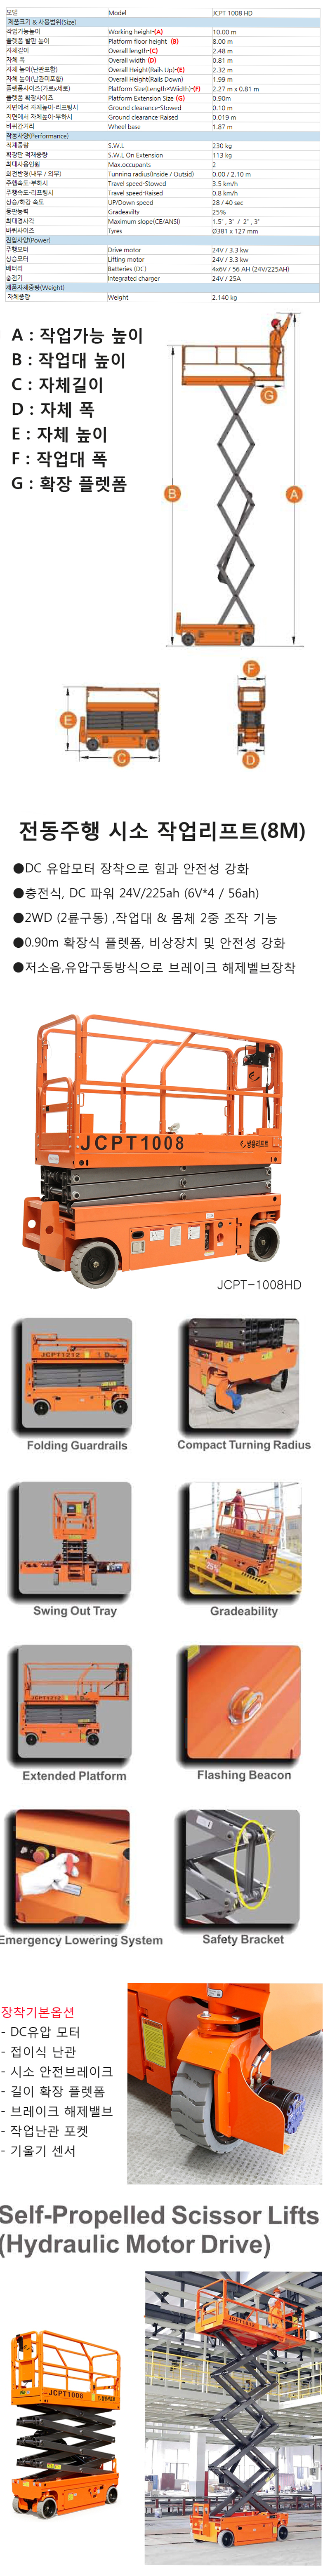 JCPT 1008 HD